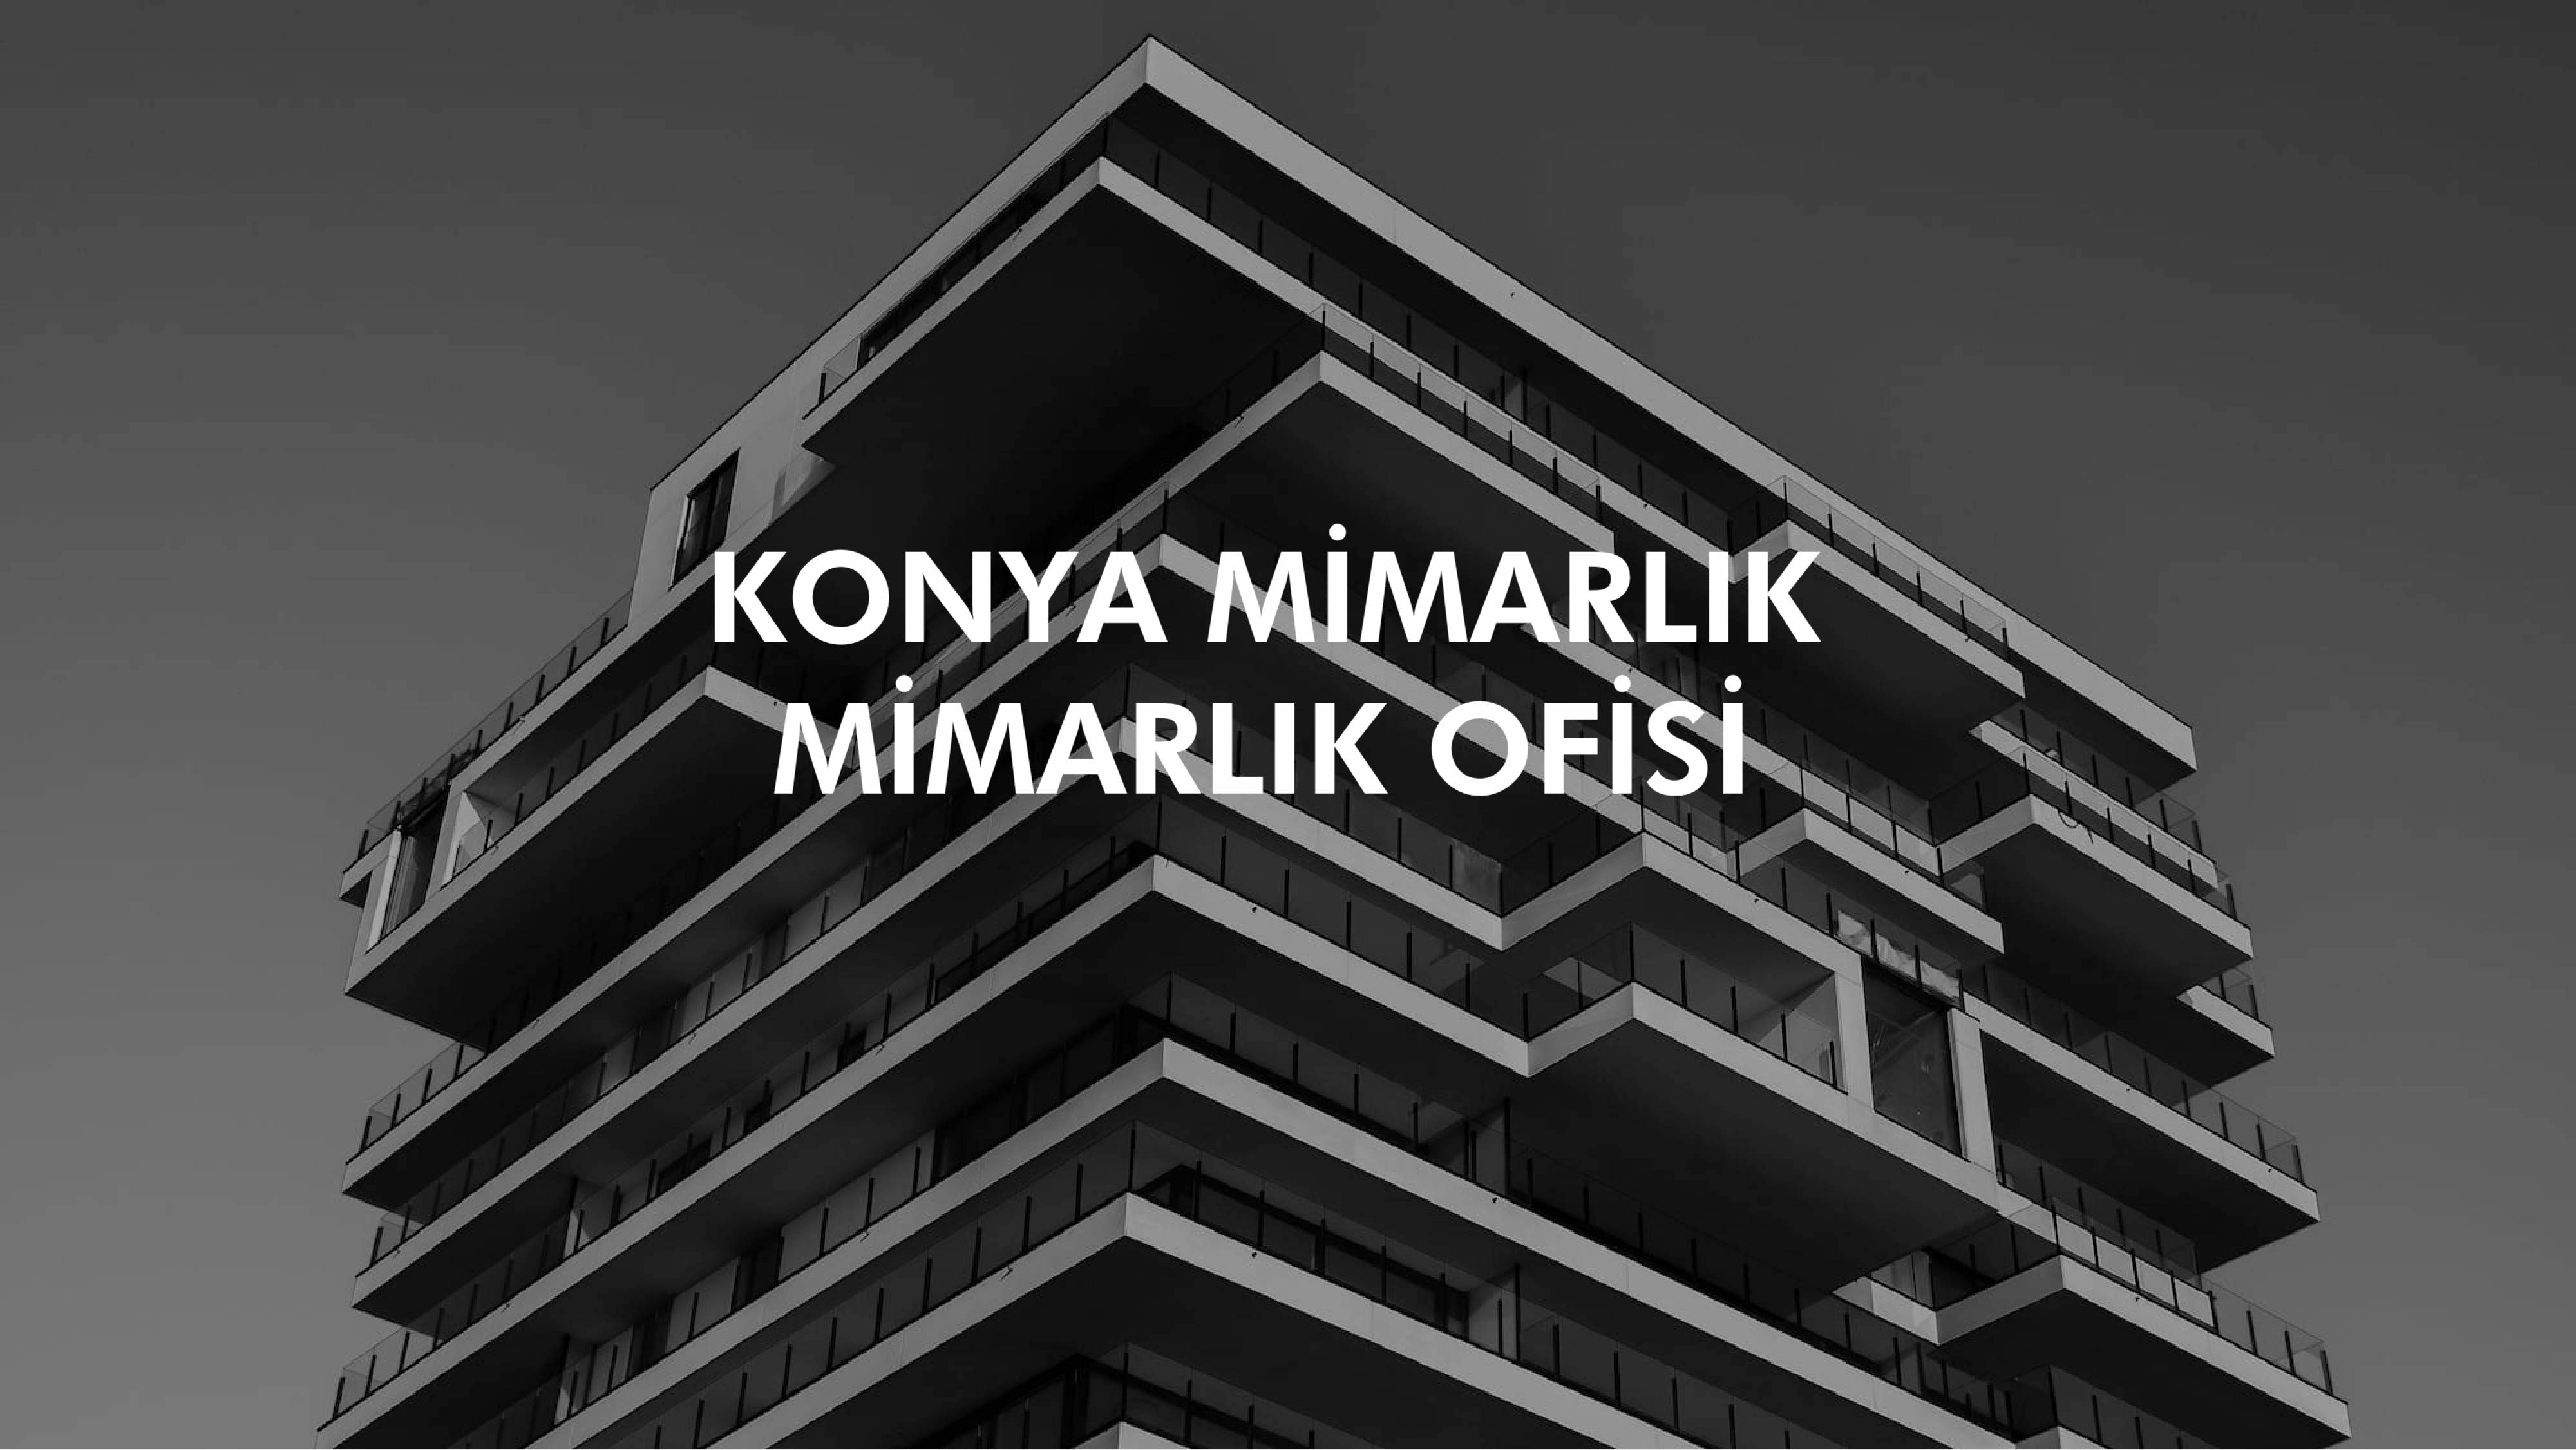 Konya Mimar, Konya'daki en iyi mimarlar, Konya MİMARLIK, Konya İç Mimarlık ofisleri, Konya İç Mimarlık ofisleri, Villa Mimarlık